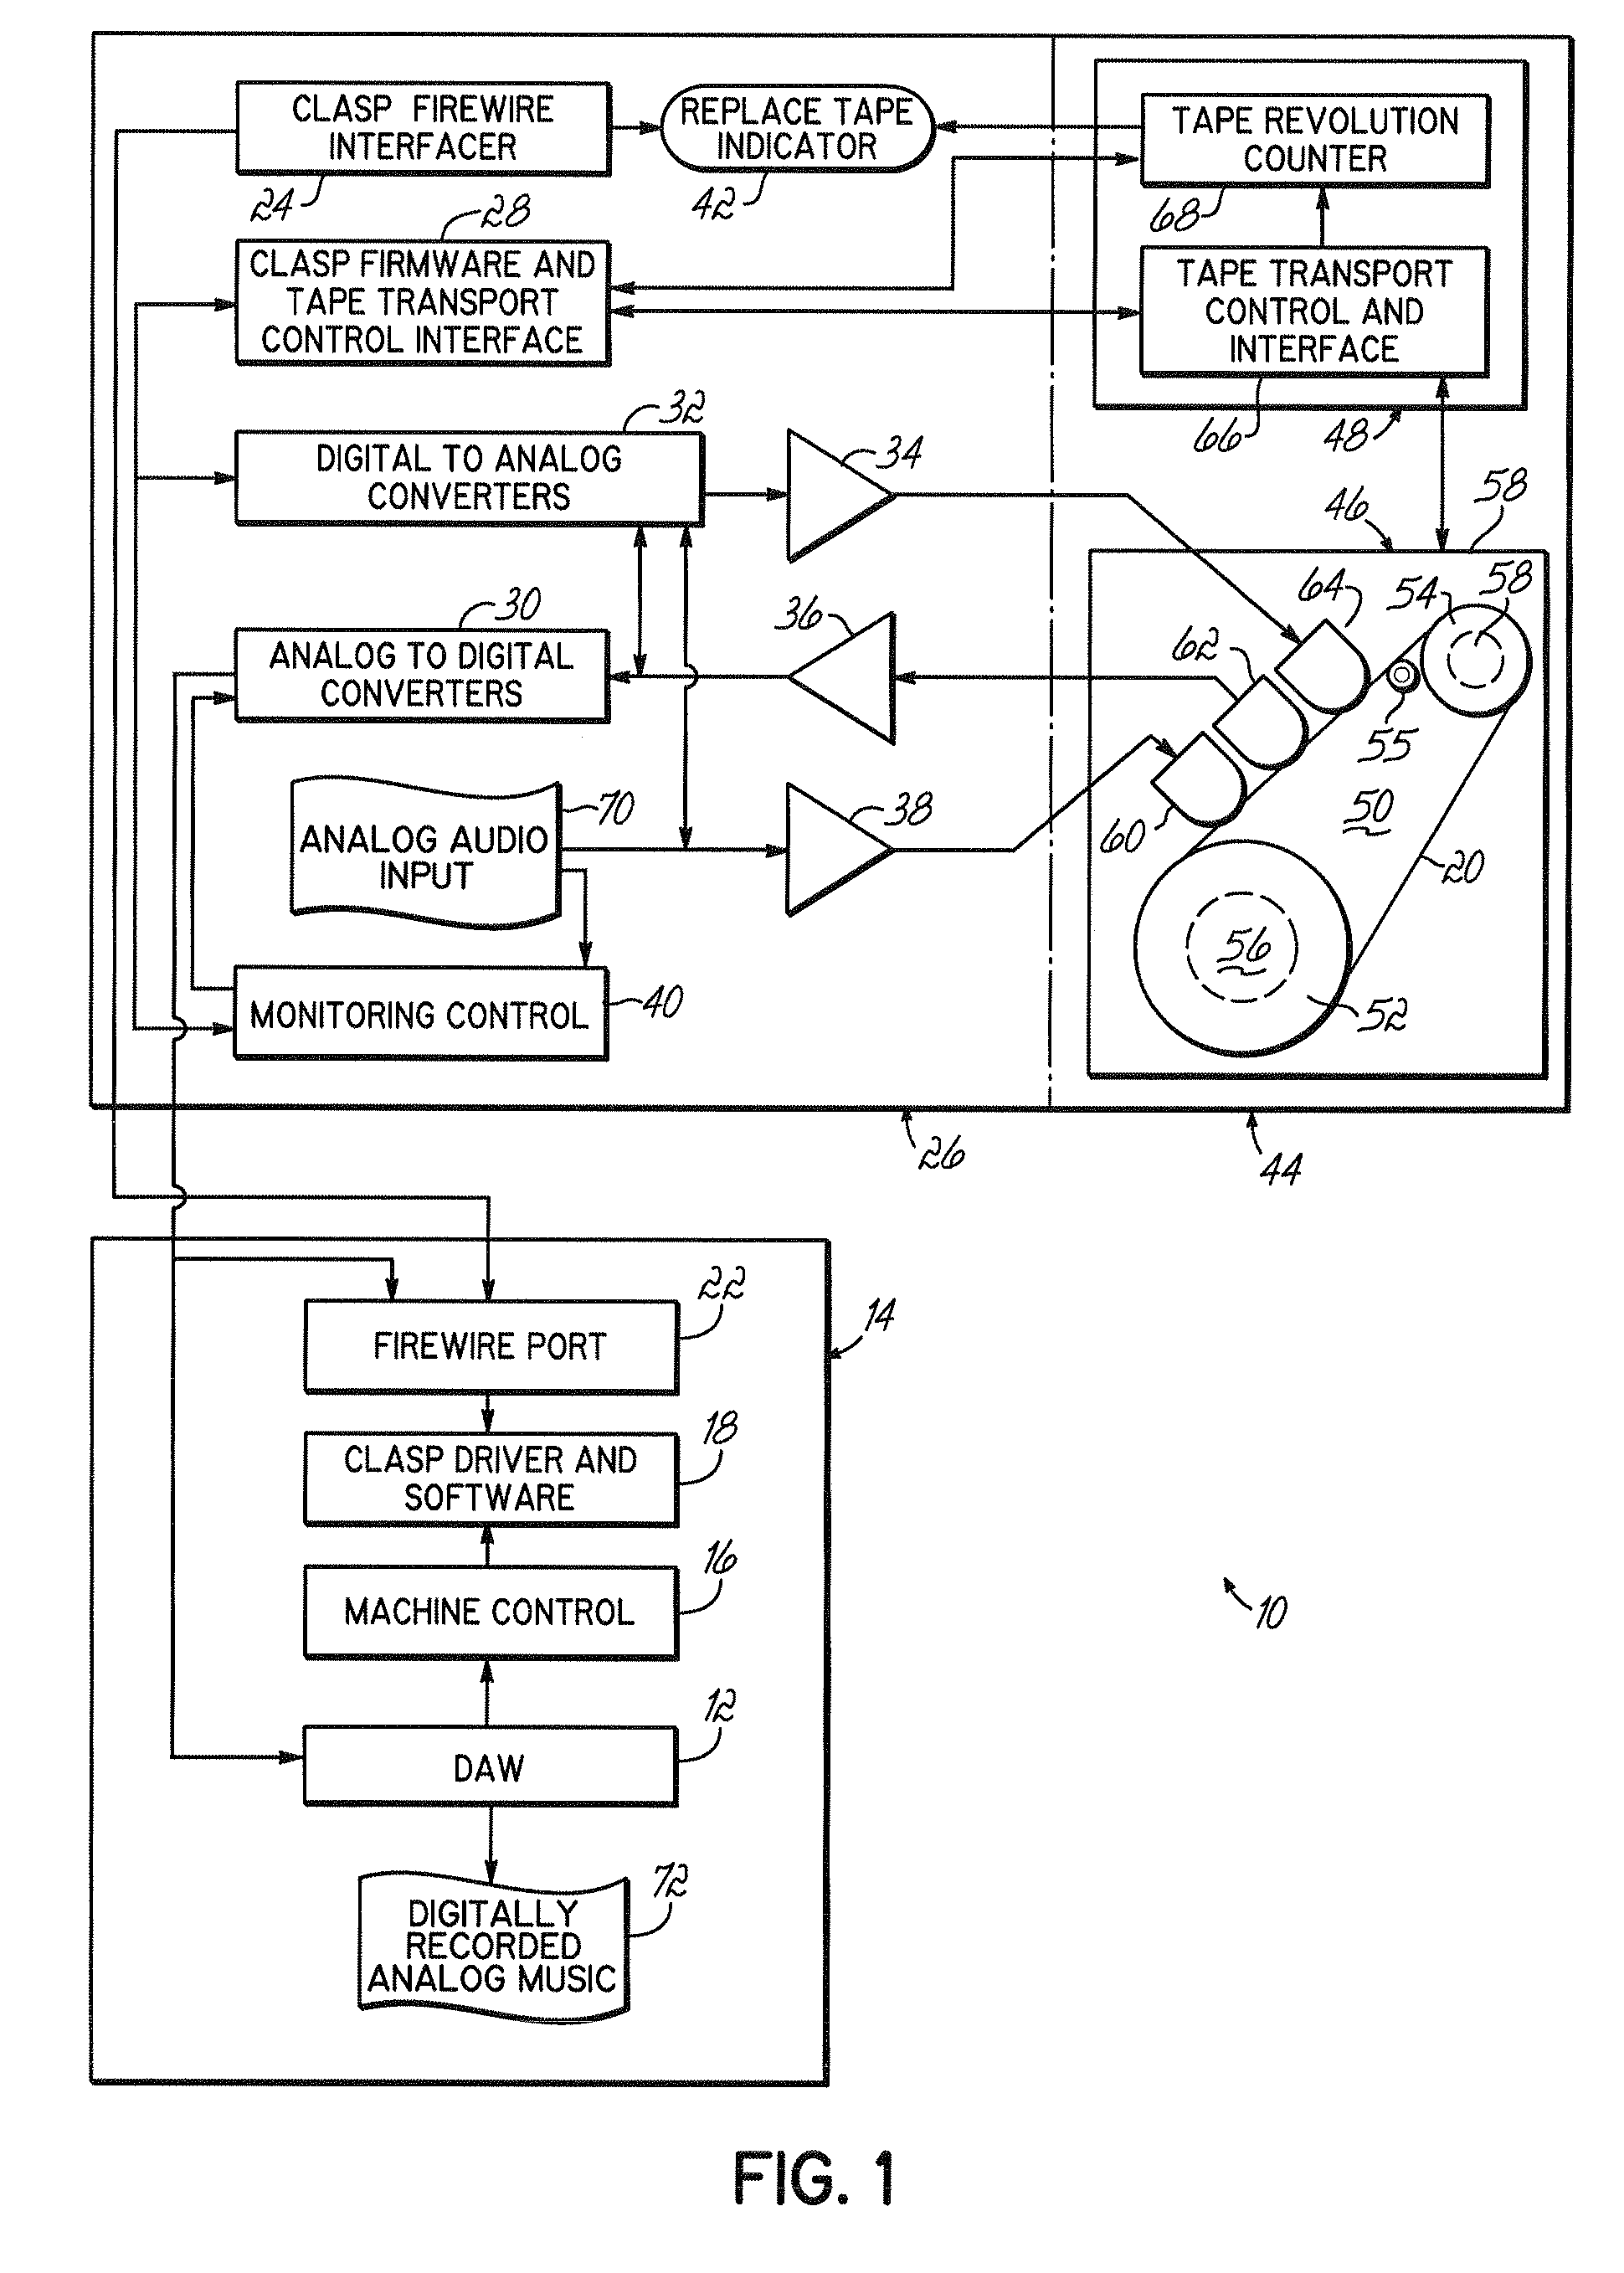 Closed loop analog signal processor ("clasp") system